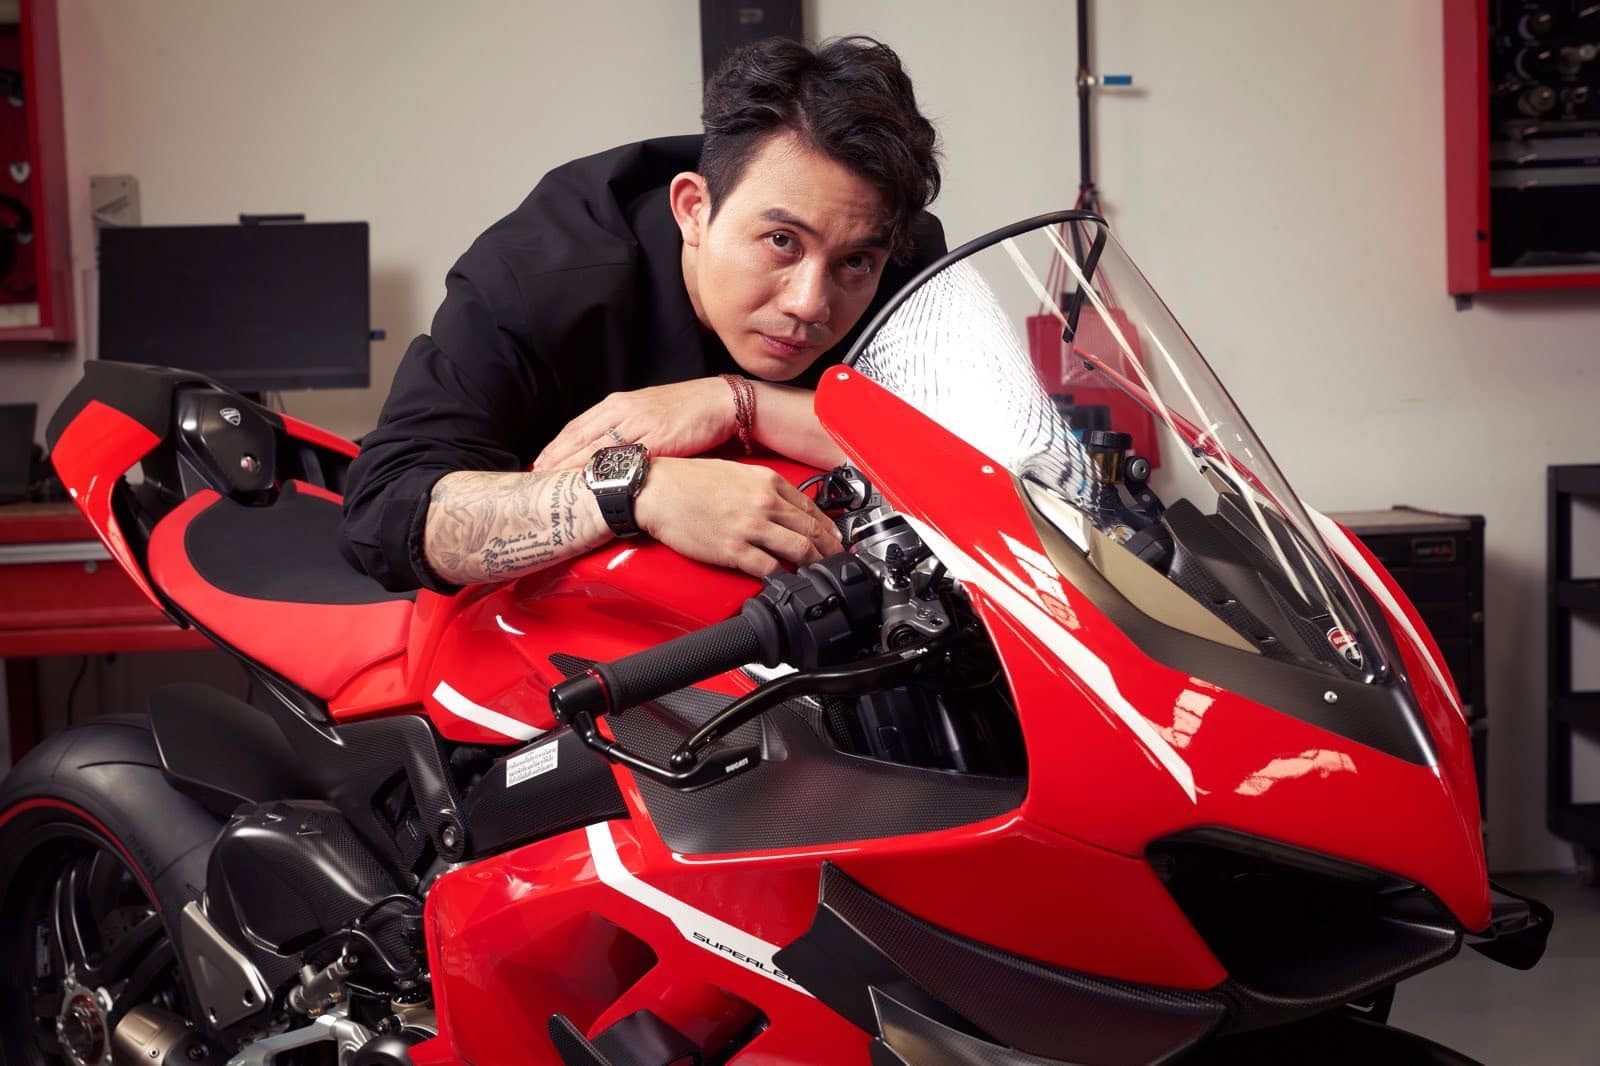 The price of the unique Minh Plastics Ducati superbike in Vietnam is 6 billion VND